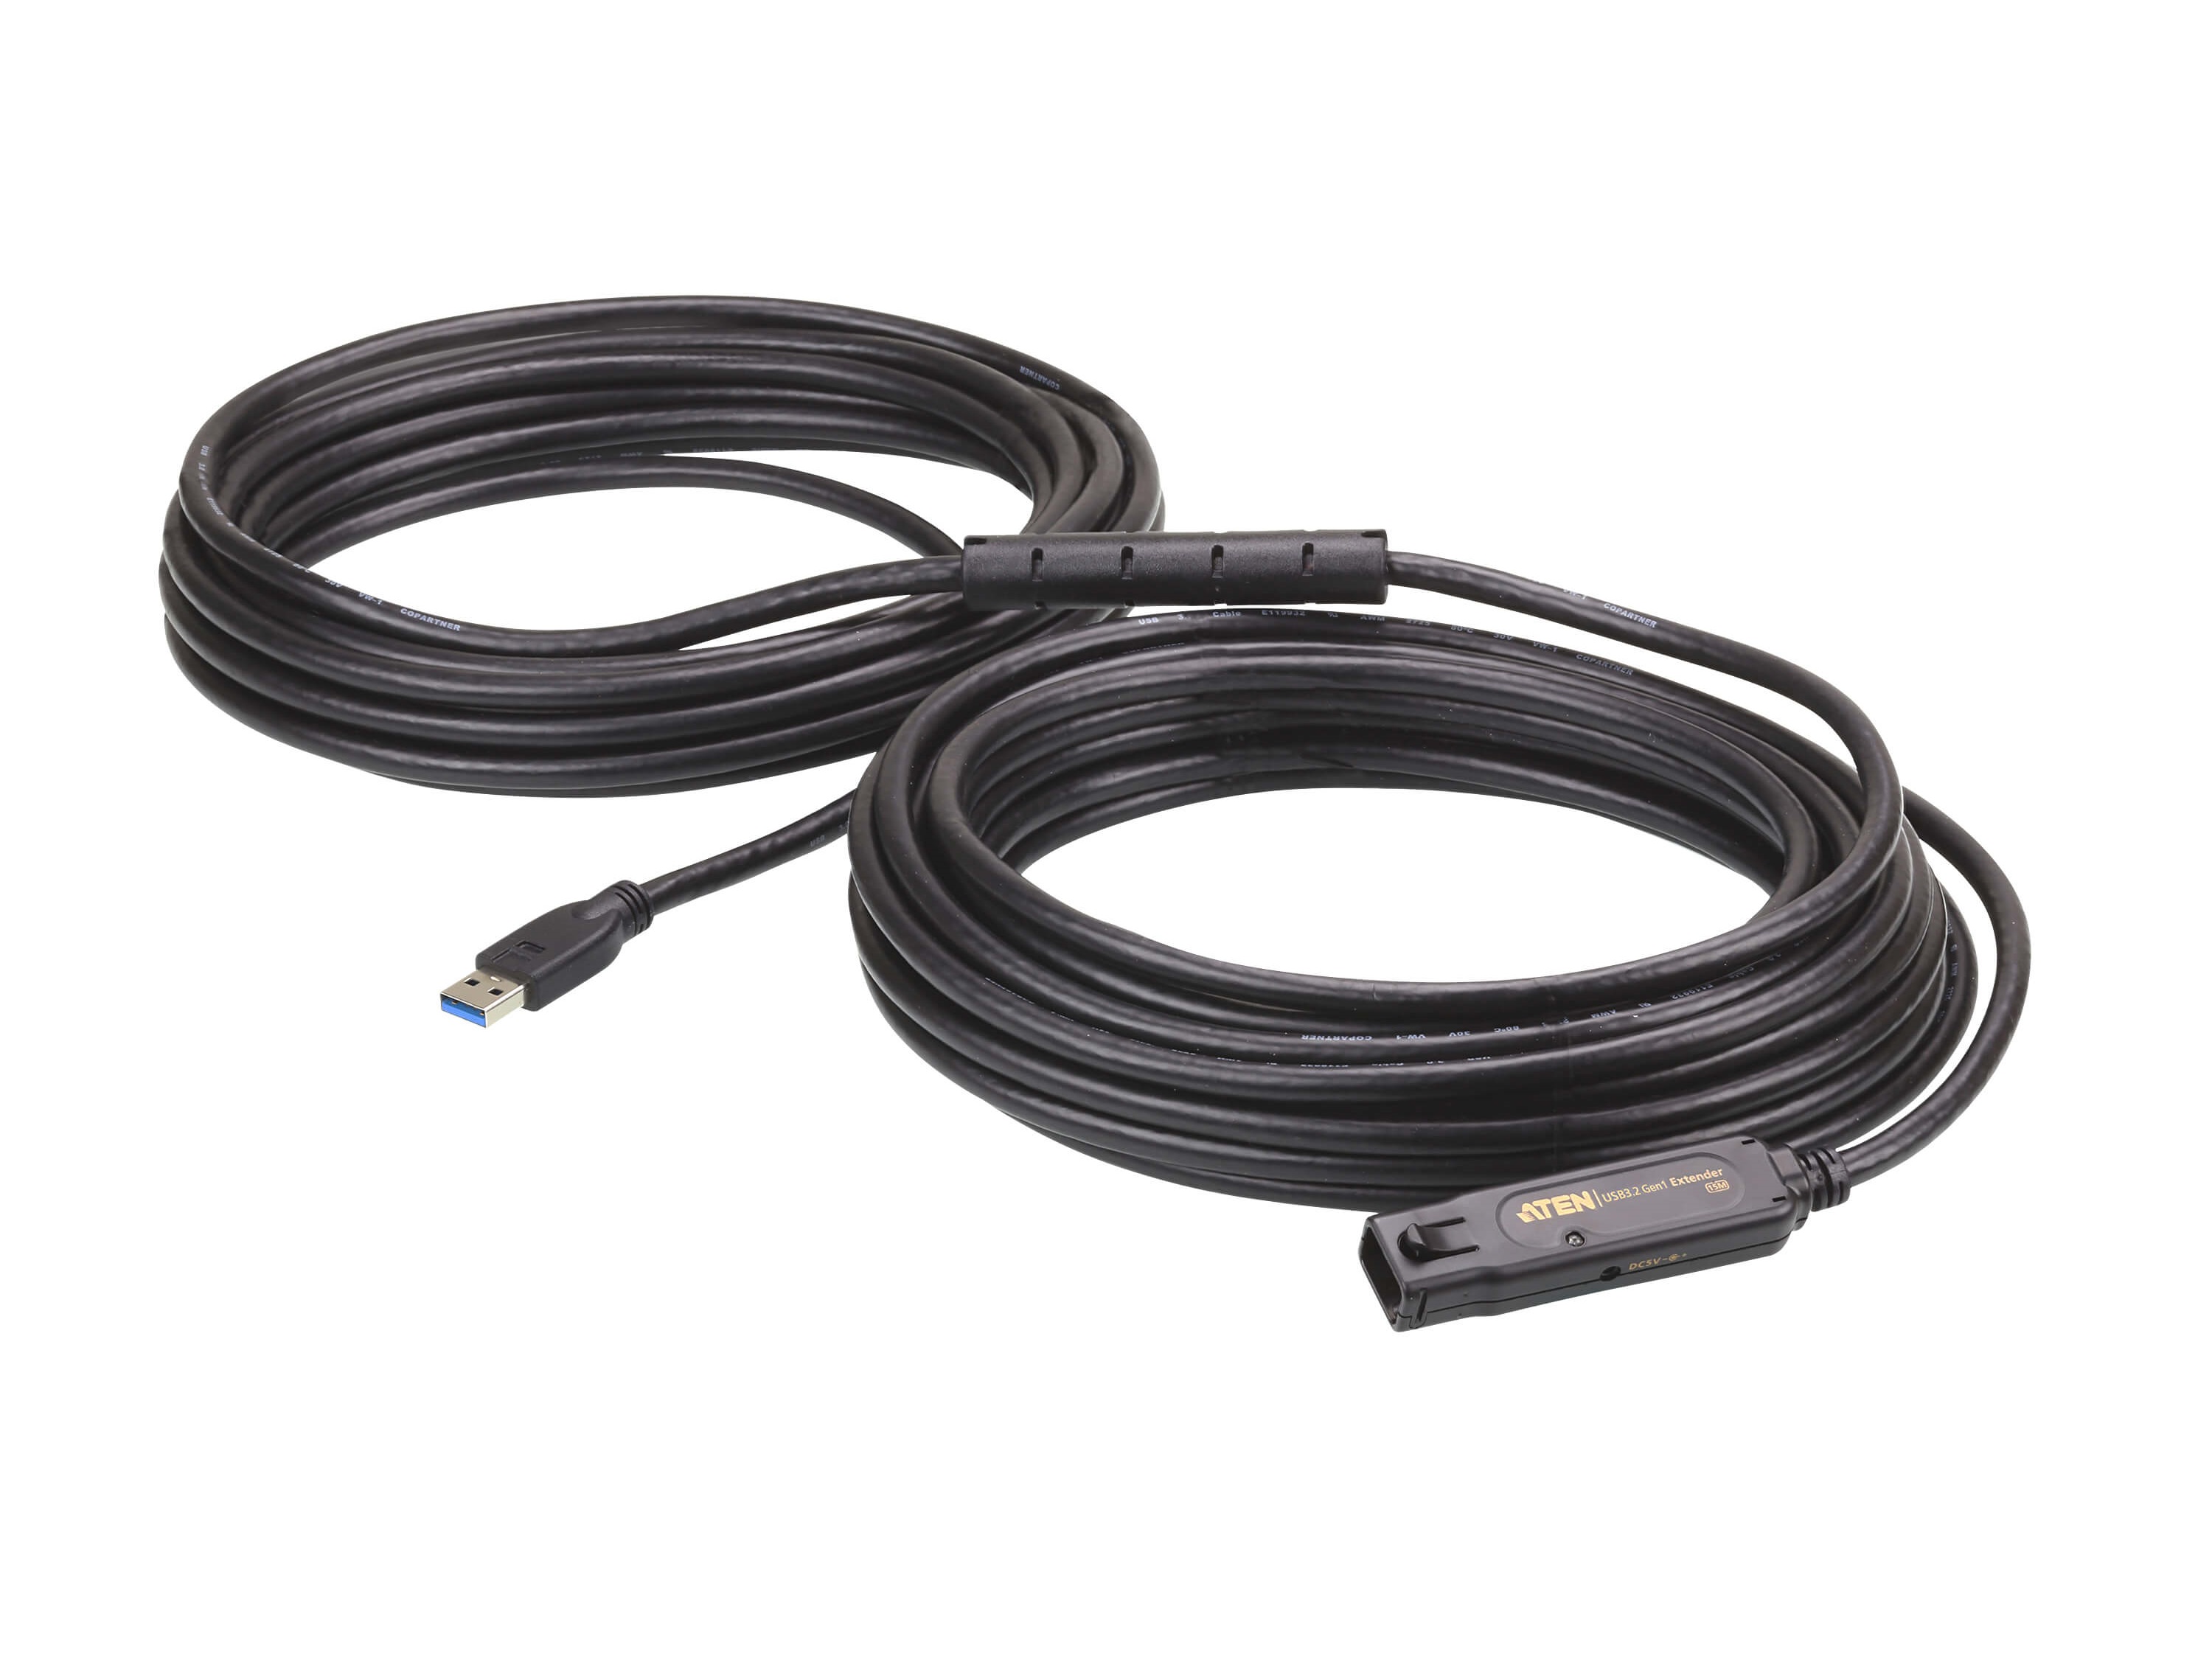 Aten UE3315A 15m USB 3.1 Gen1 Extender Cable